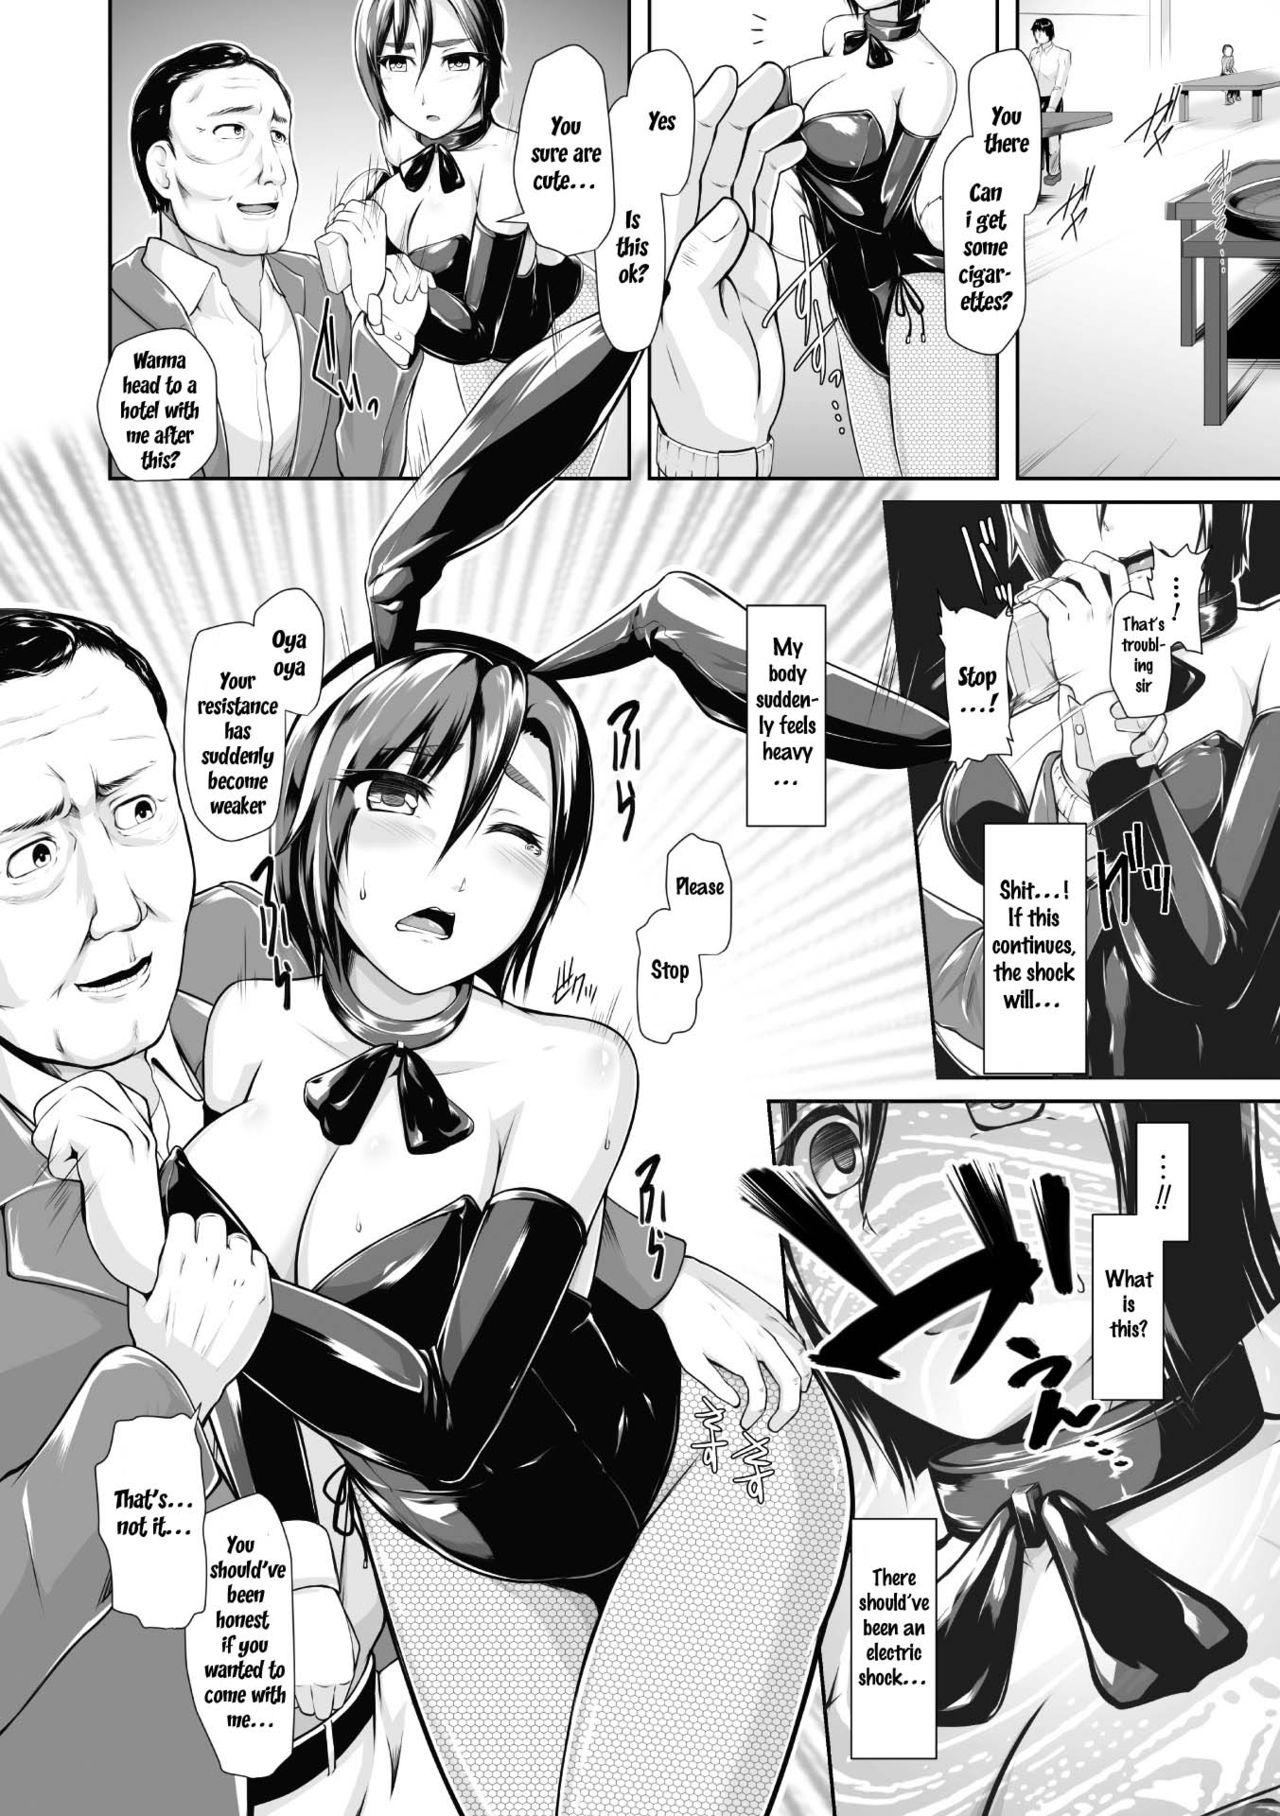 Relax 2D Comic Magazine Waki Fechi Bunny Girl Vol.1 Ch 1-3 Gay Amateur - Page 8